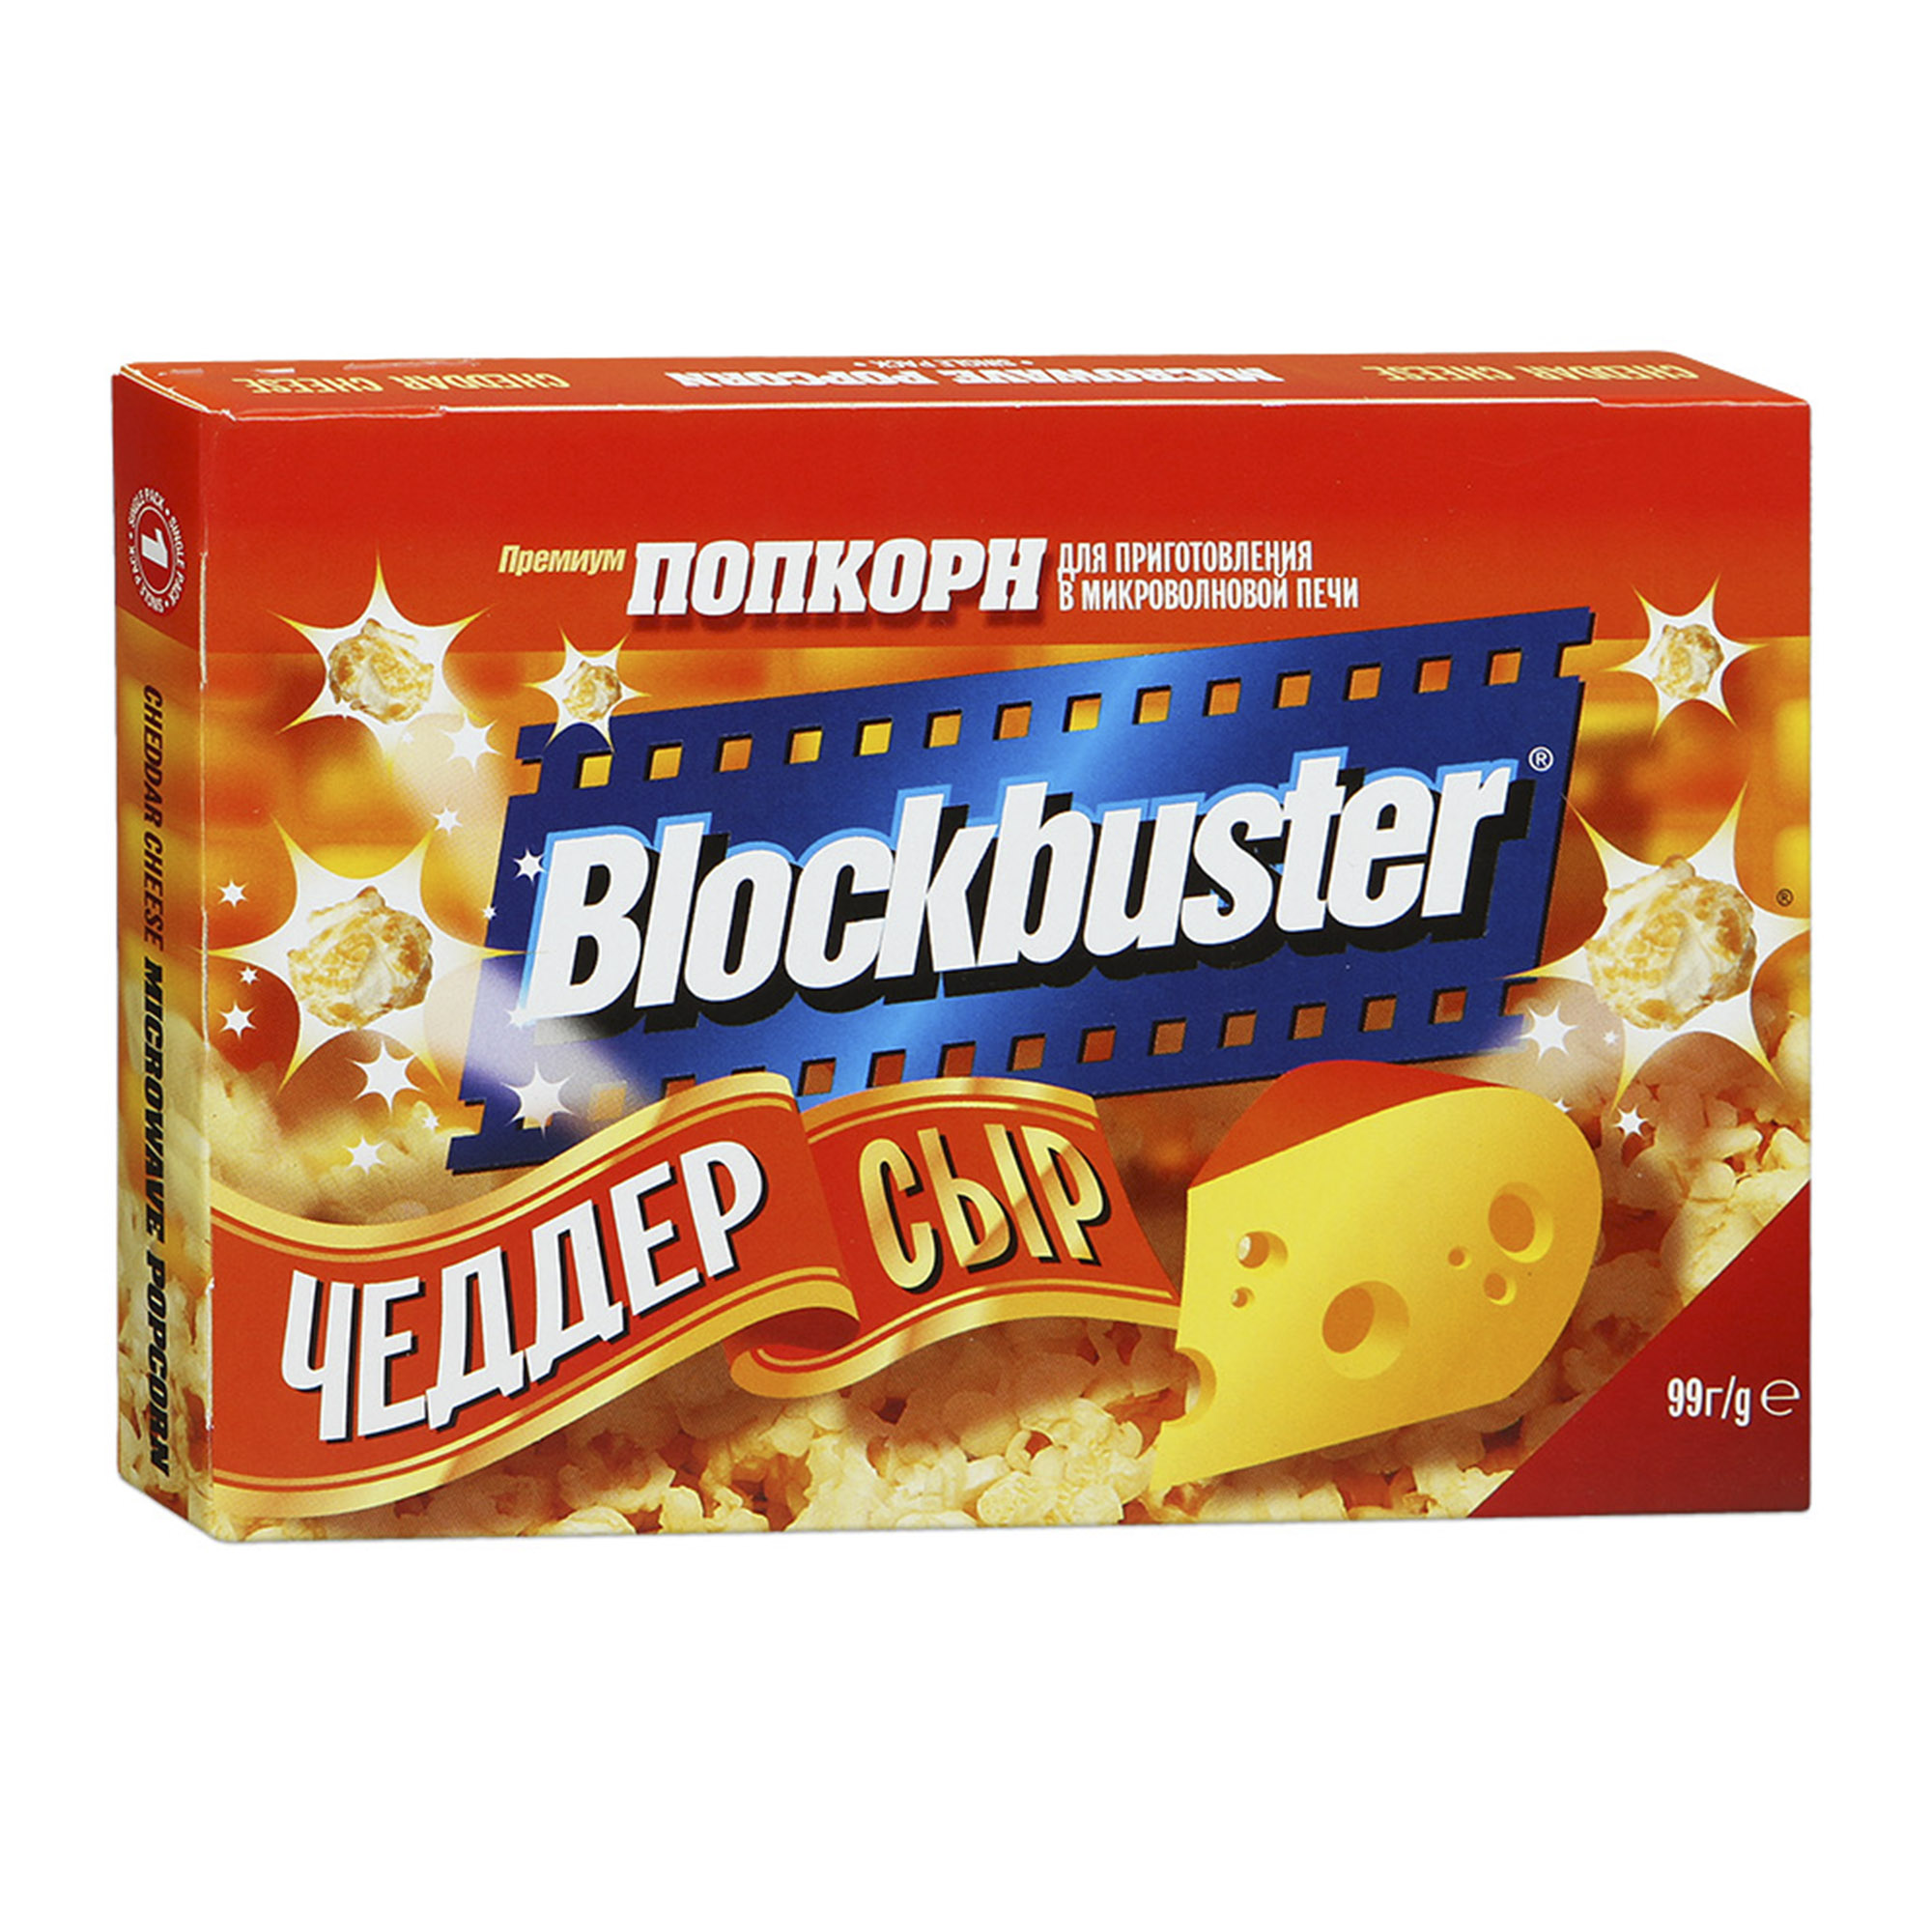 Попкорн Blockbuster с сыром Чеддер 90 г кукуруза попкорн уральский дачник